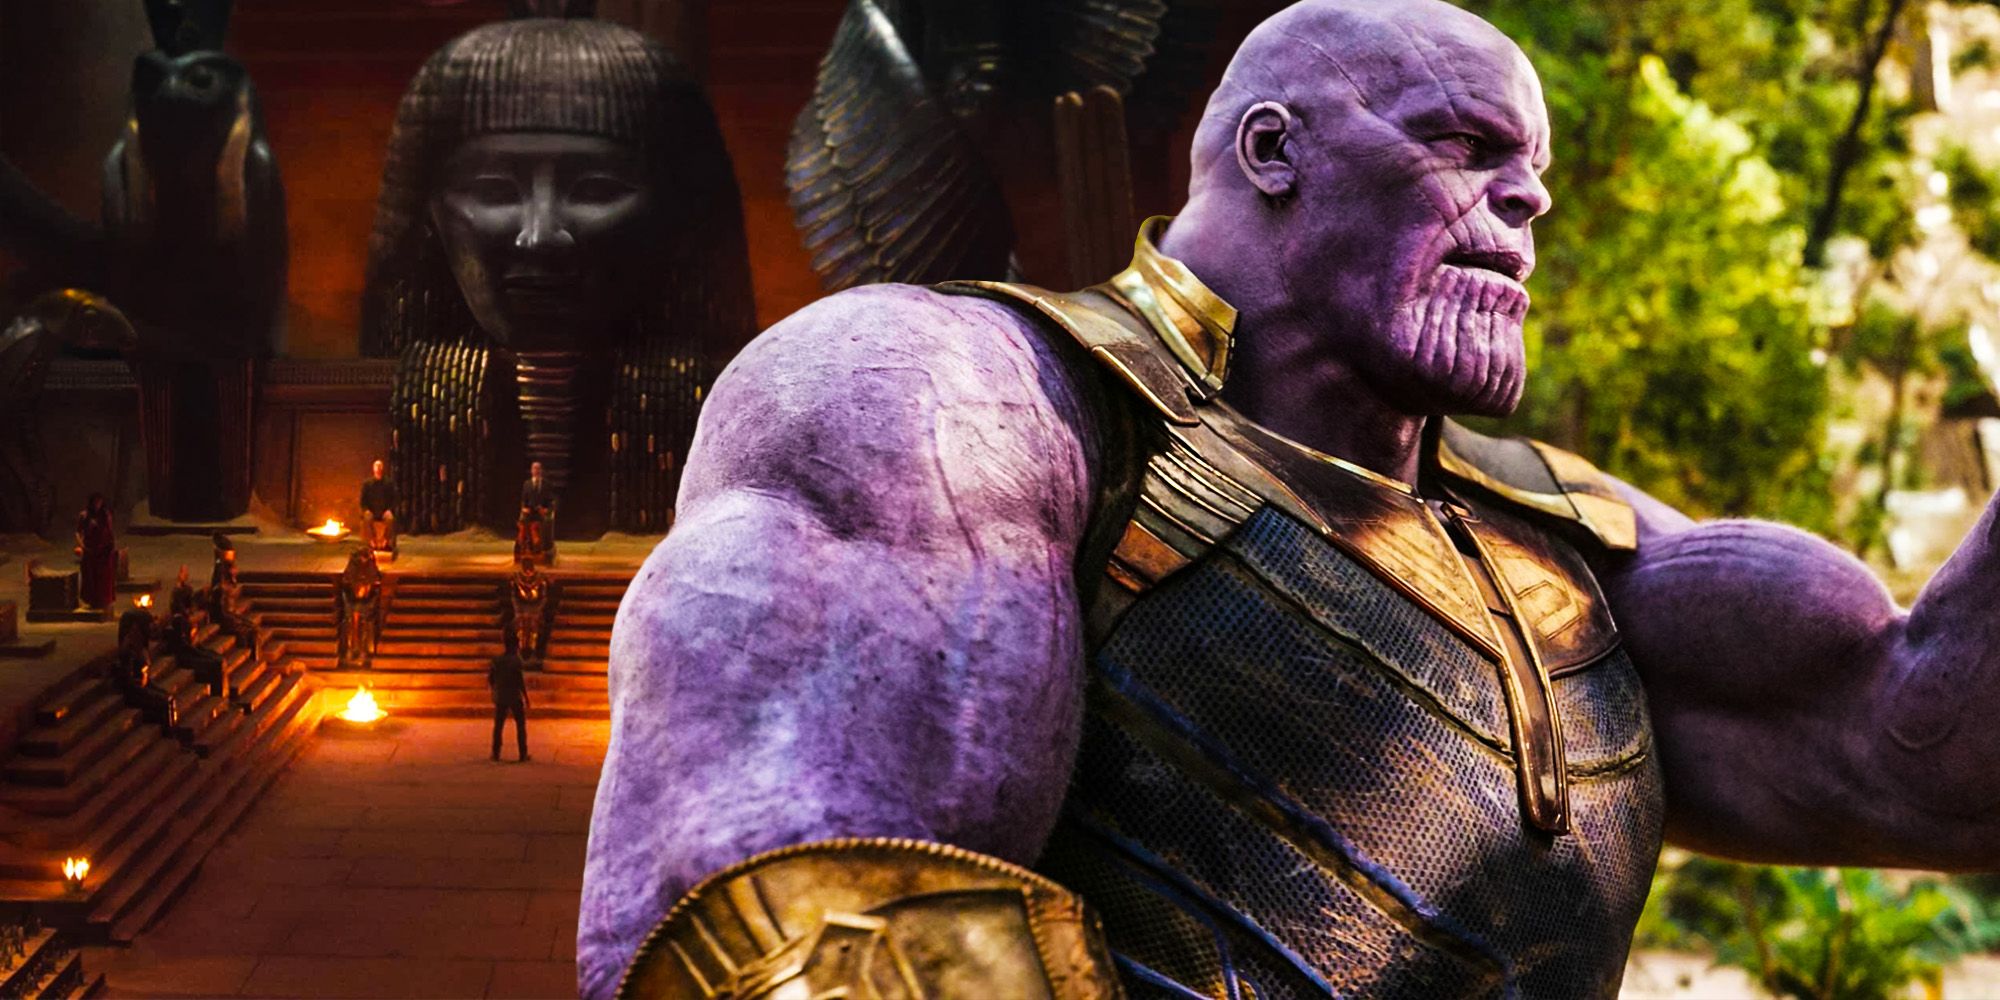 Thanos Face Minimal 4K Wallpapers